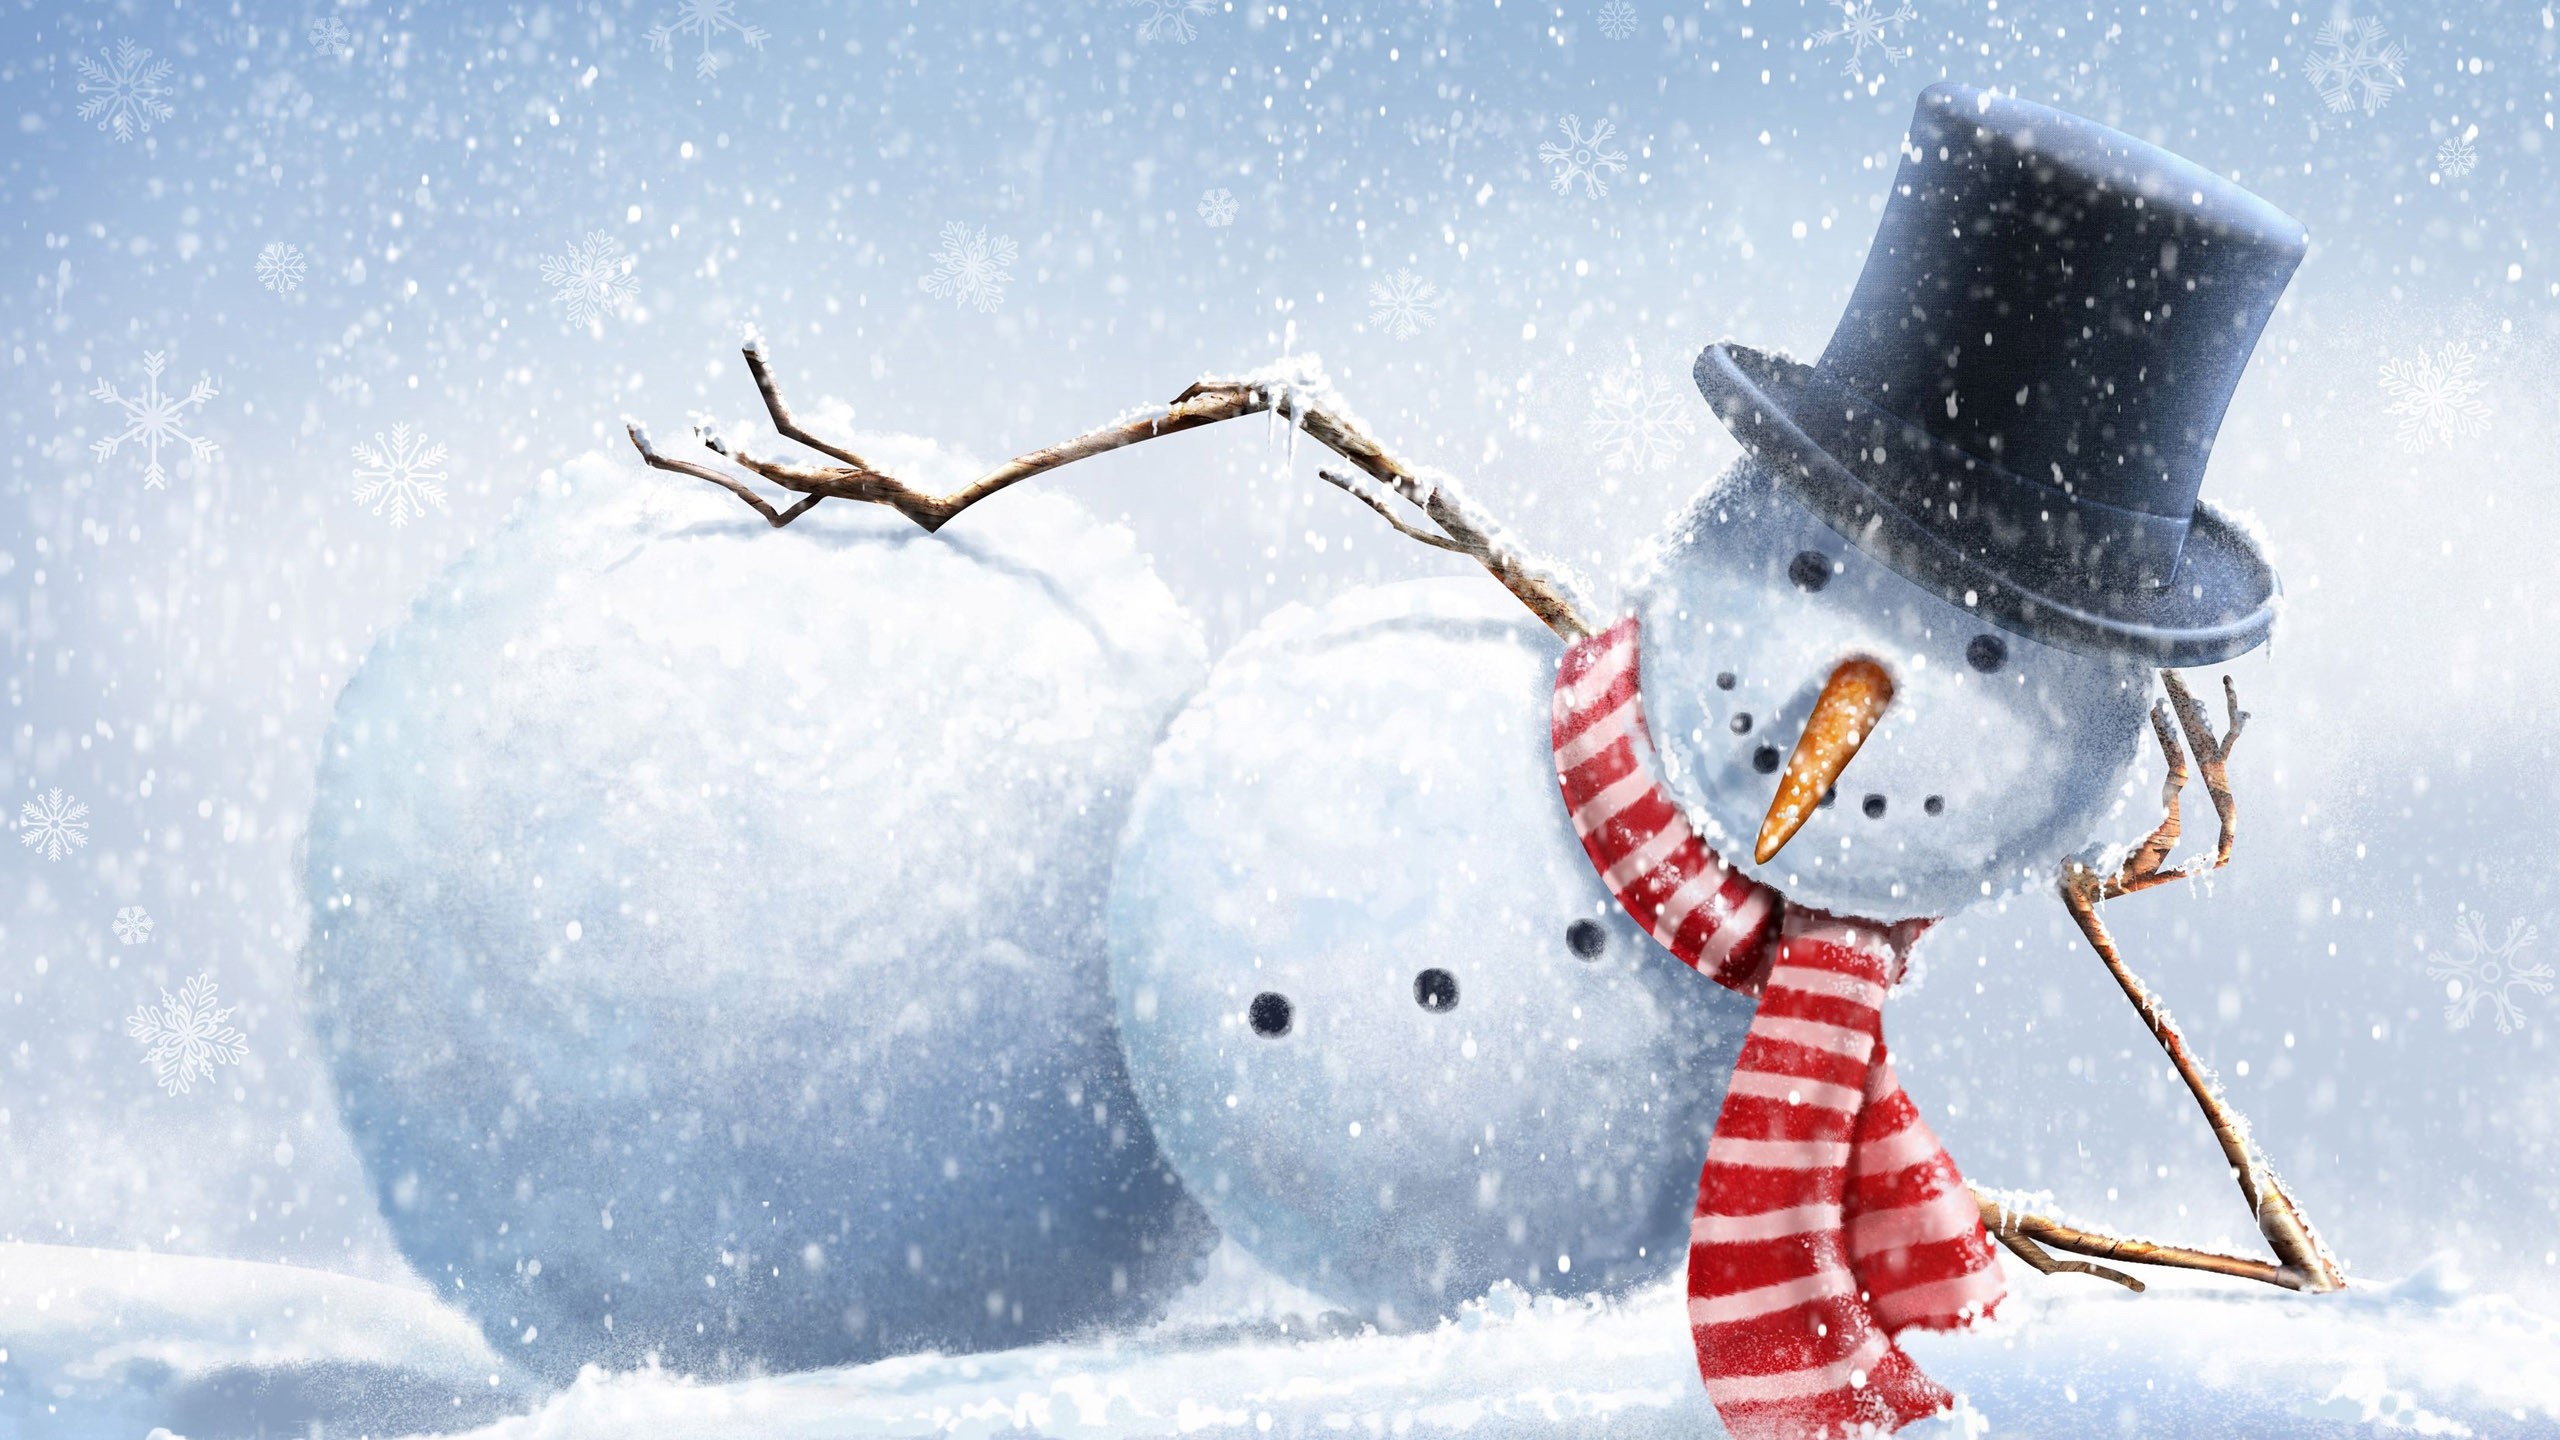 General 2560x1440 drawing snow winter top hat branch carrots snowflakes scarf snowman digital art